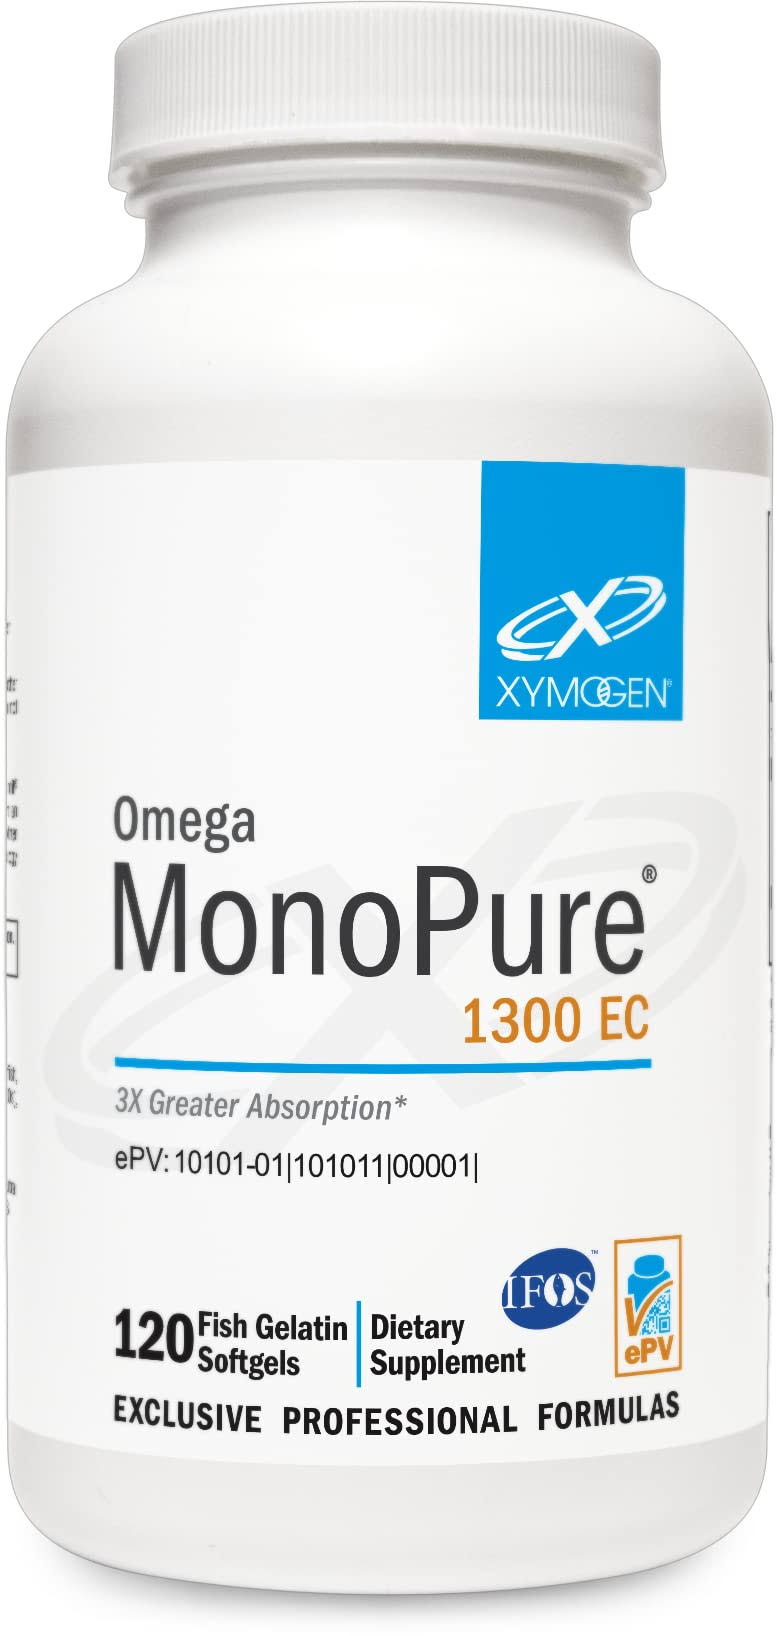 Xymogen Omega MonoPure 1300 EC - 1,300 mg - 120 Softgels